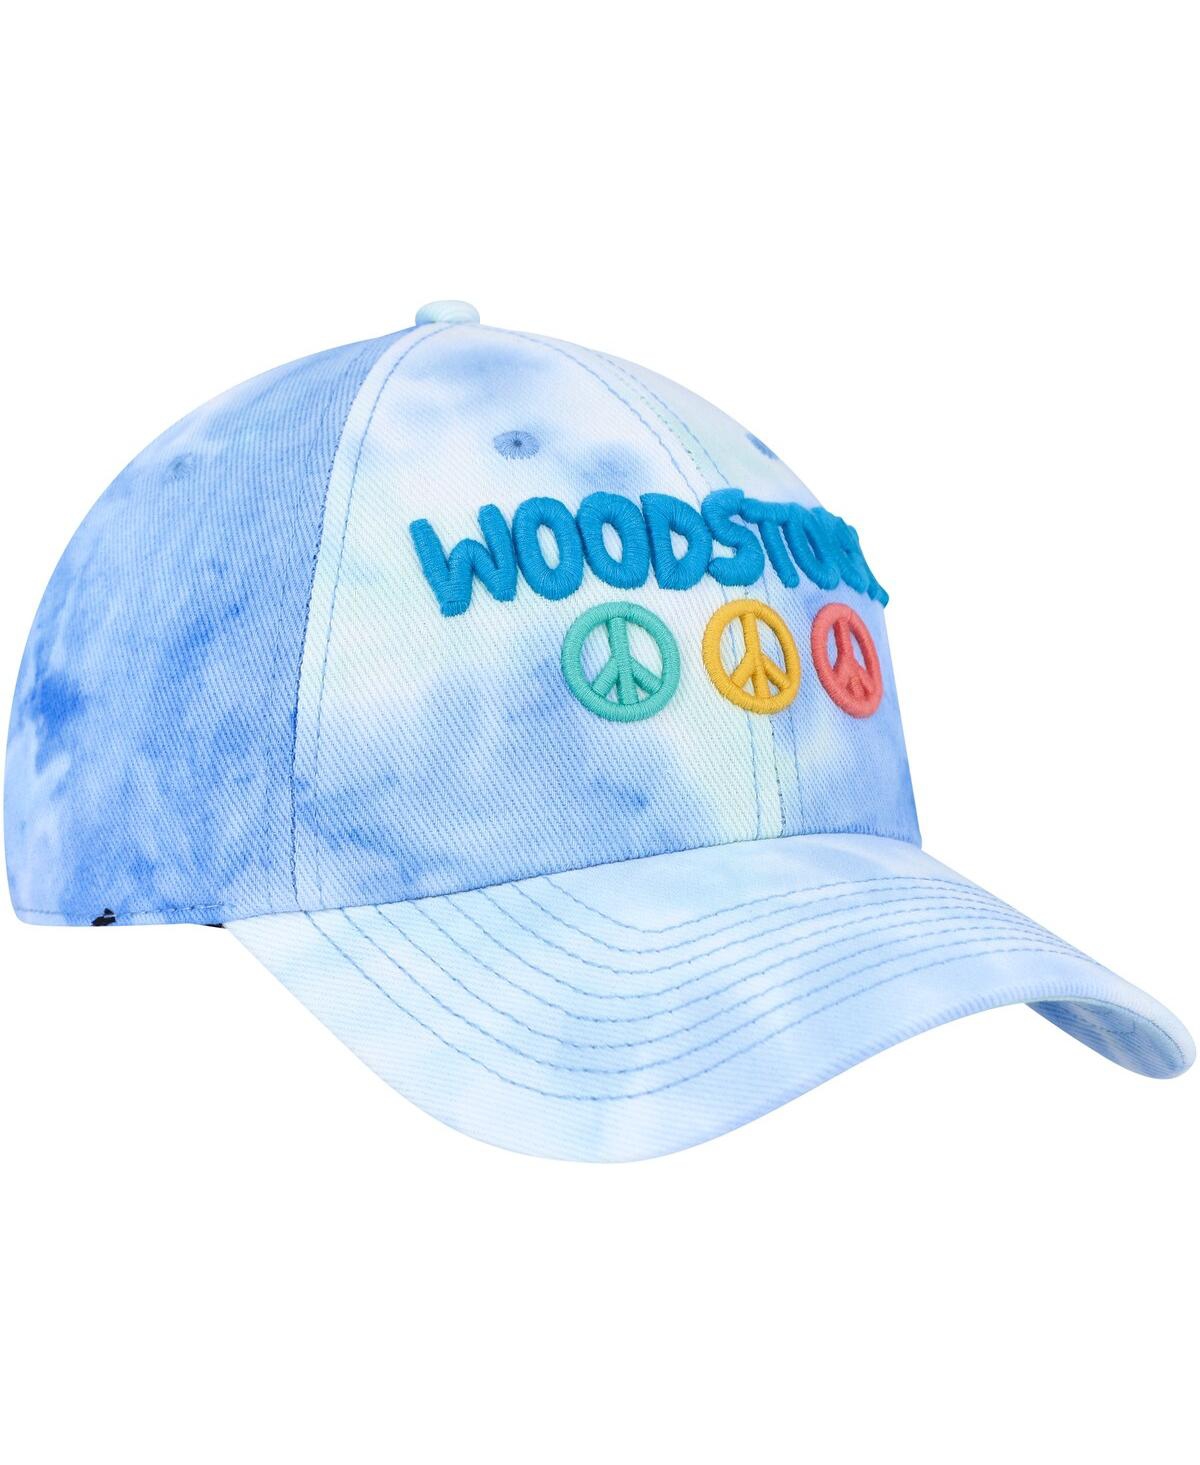 Shop American Needle Men's And Women's  Blue Woodstock Ballpark Adjustable Hat